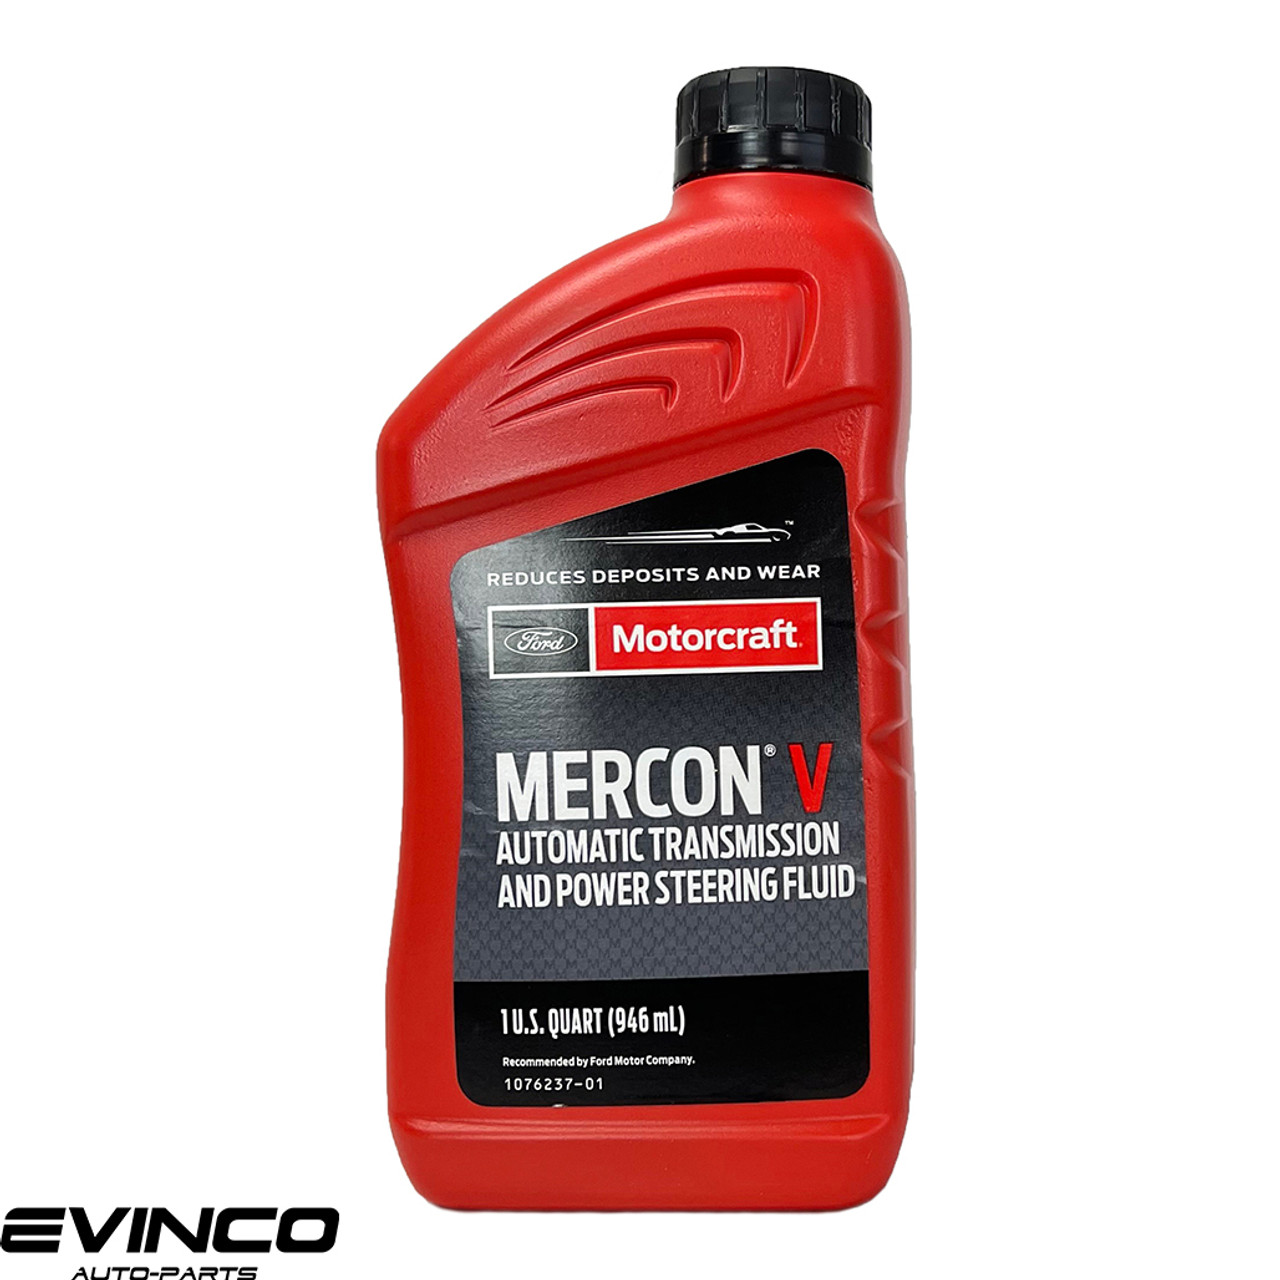 Motorcraft Mercon V Automatic Transmission Fluid - Quart